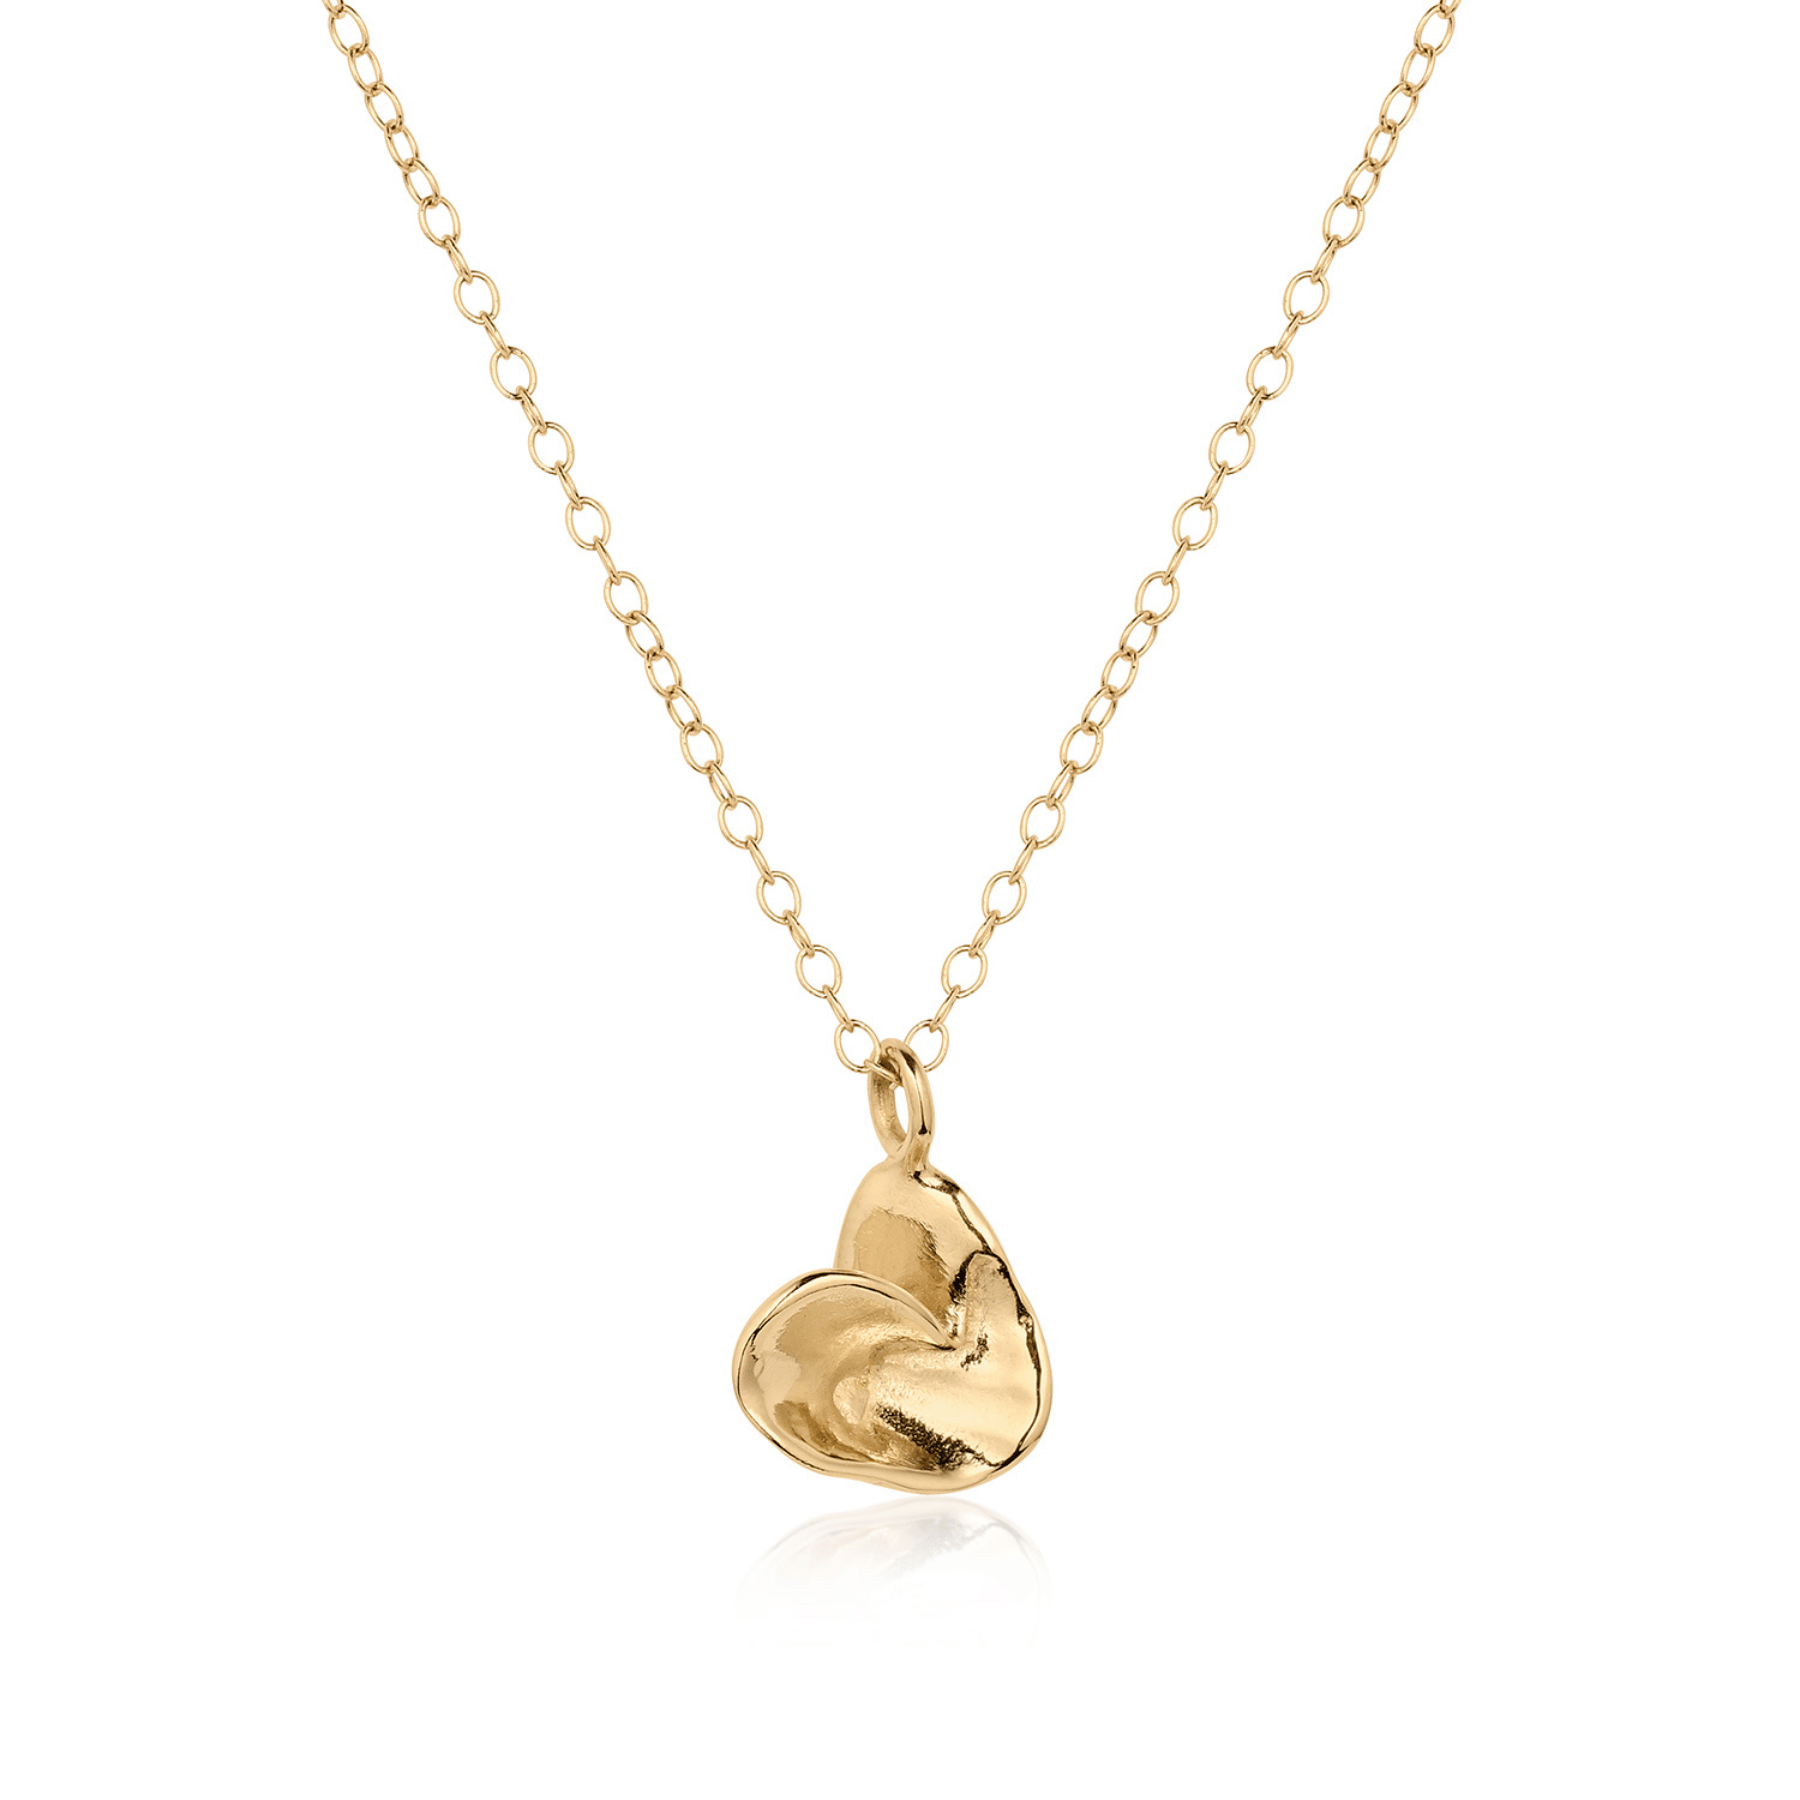 Sculptural heart pendant in 14k yellow gold